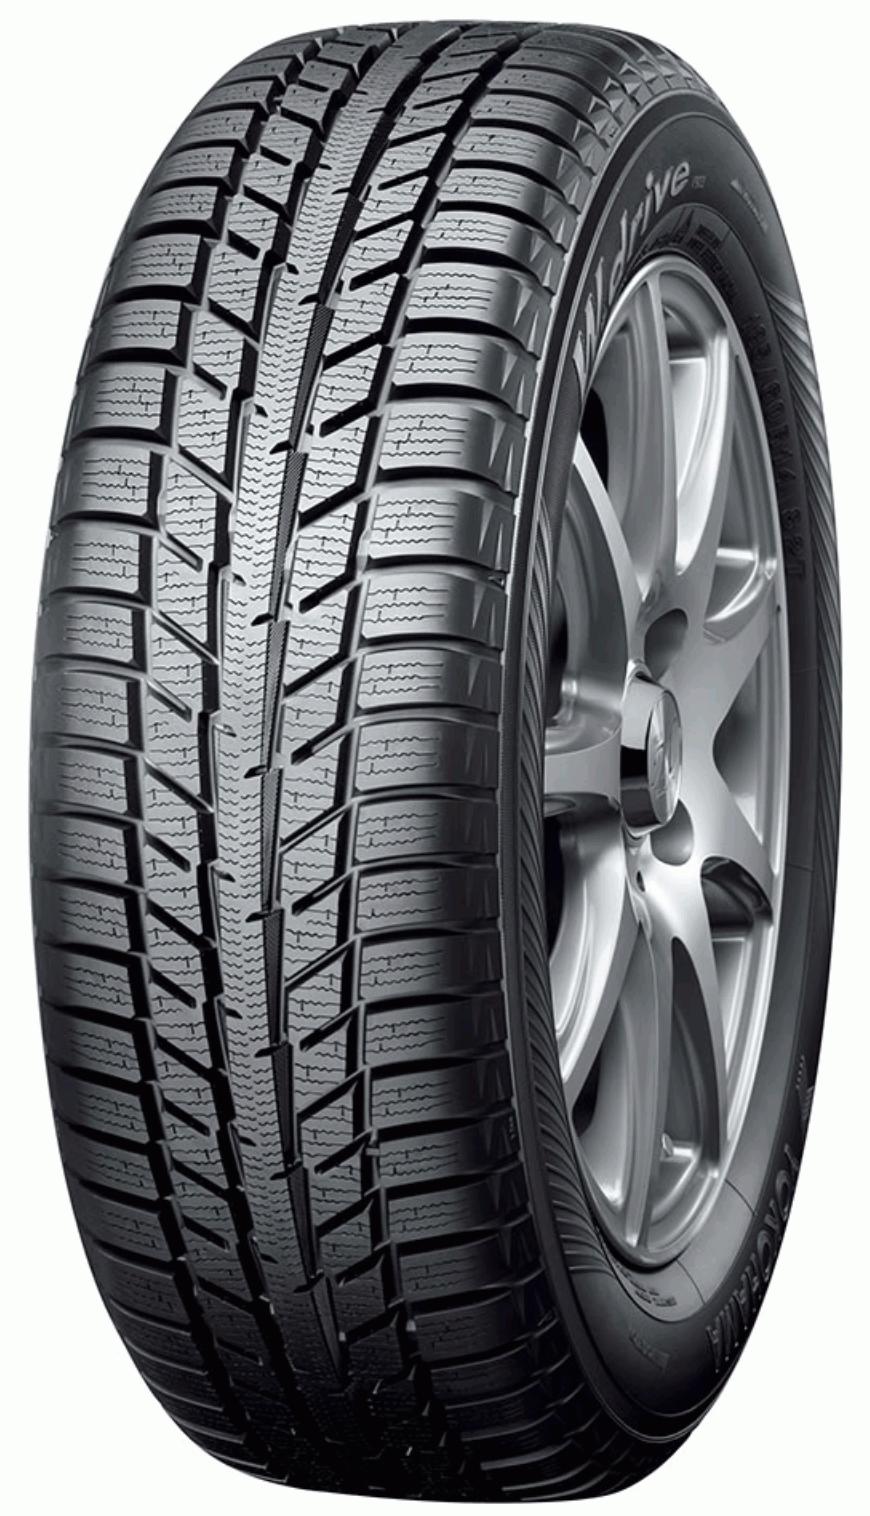 Yokohama W Drive Tests Tire Reviews and V903 -